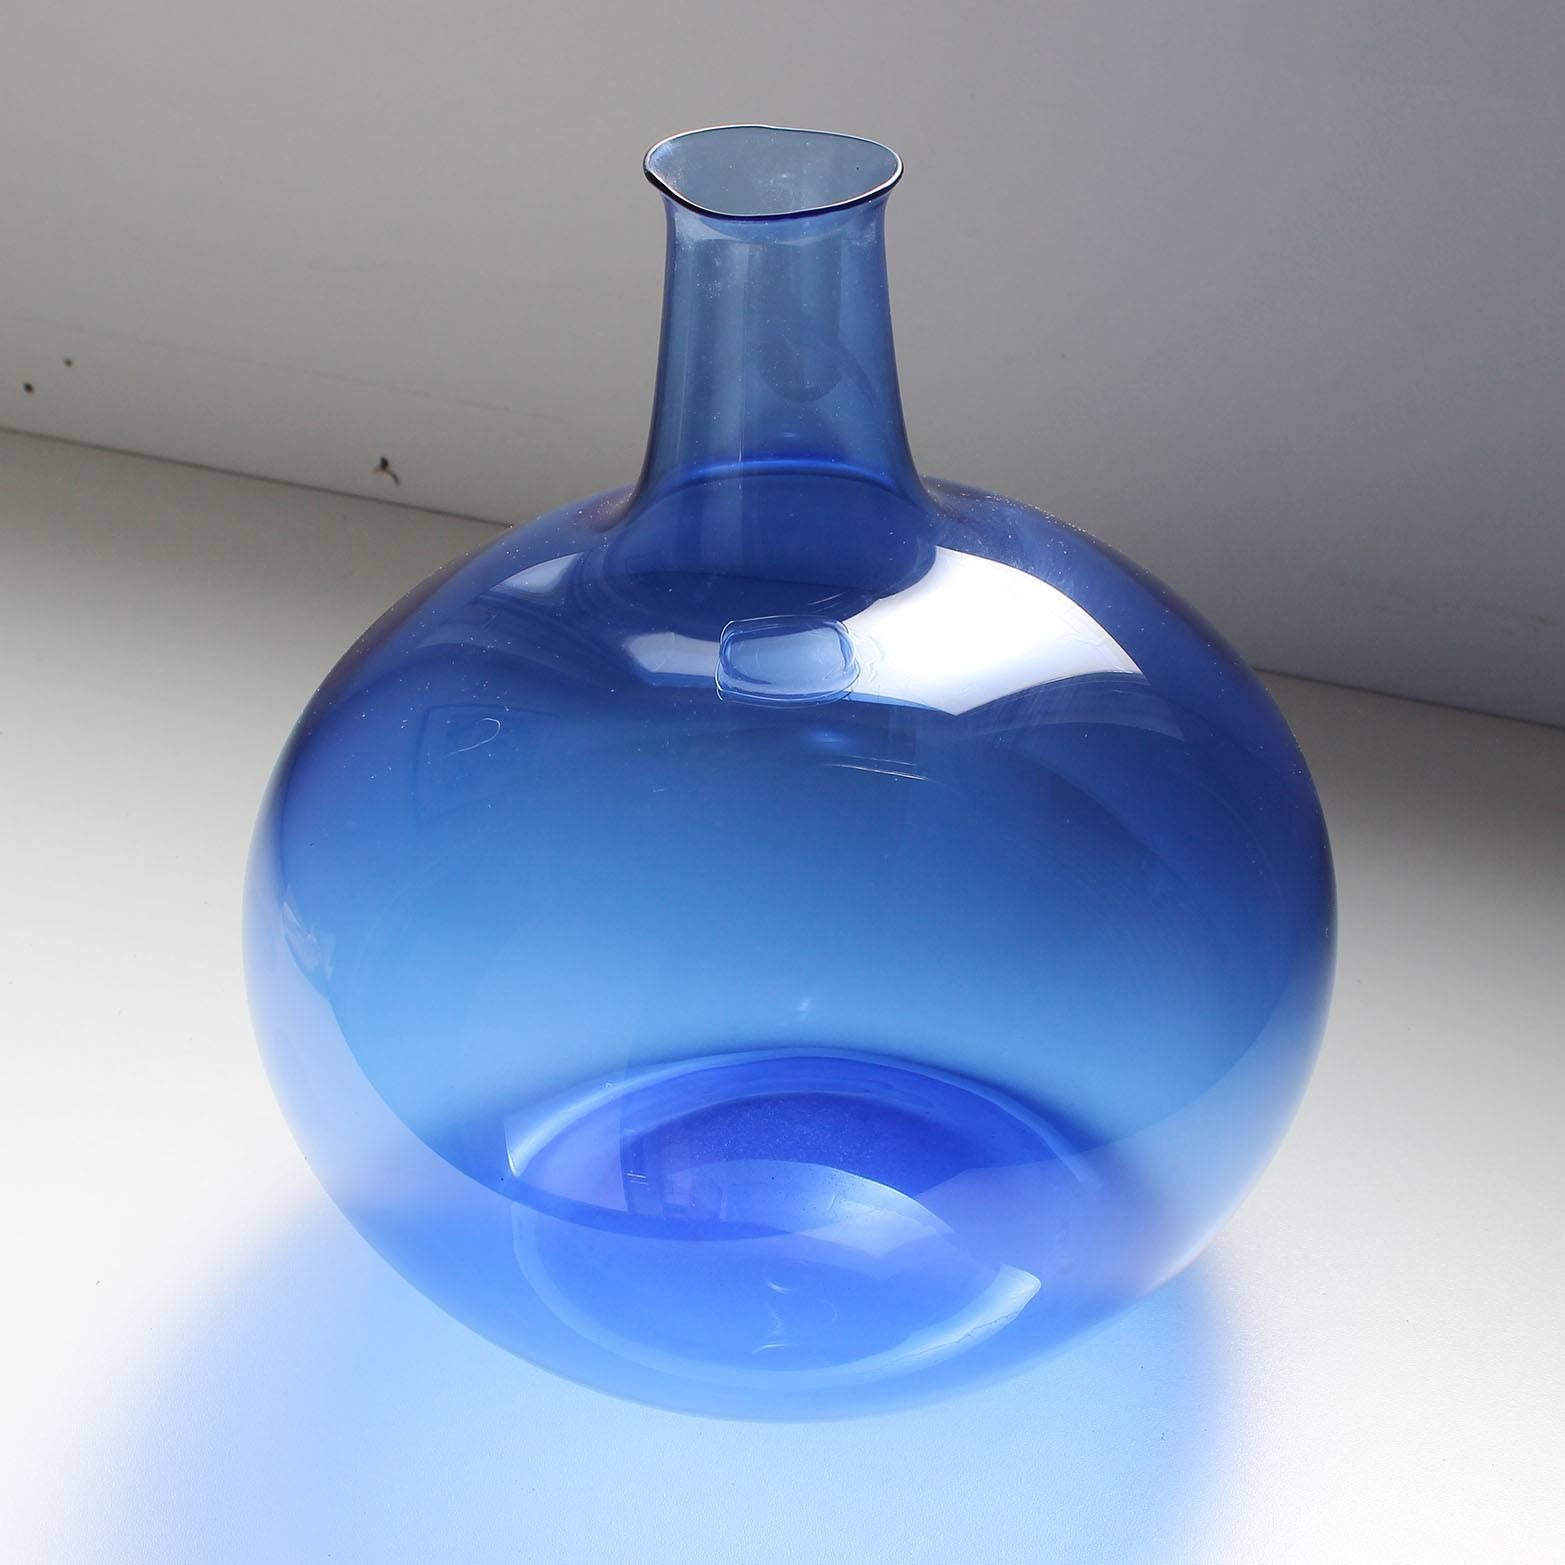 A translucent cobalt blue delicately blown glass Scandinavian decanter vase.